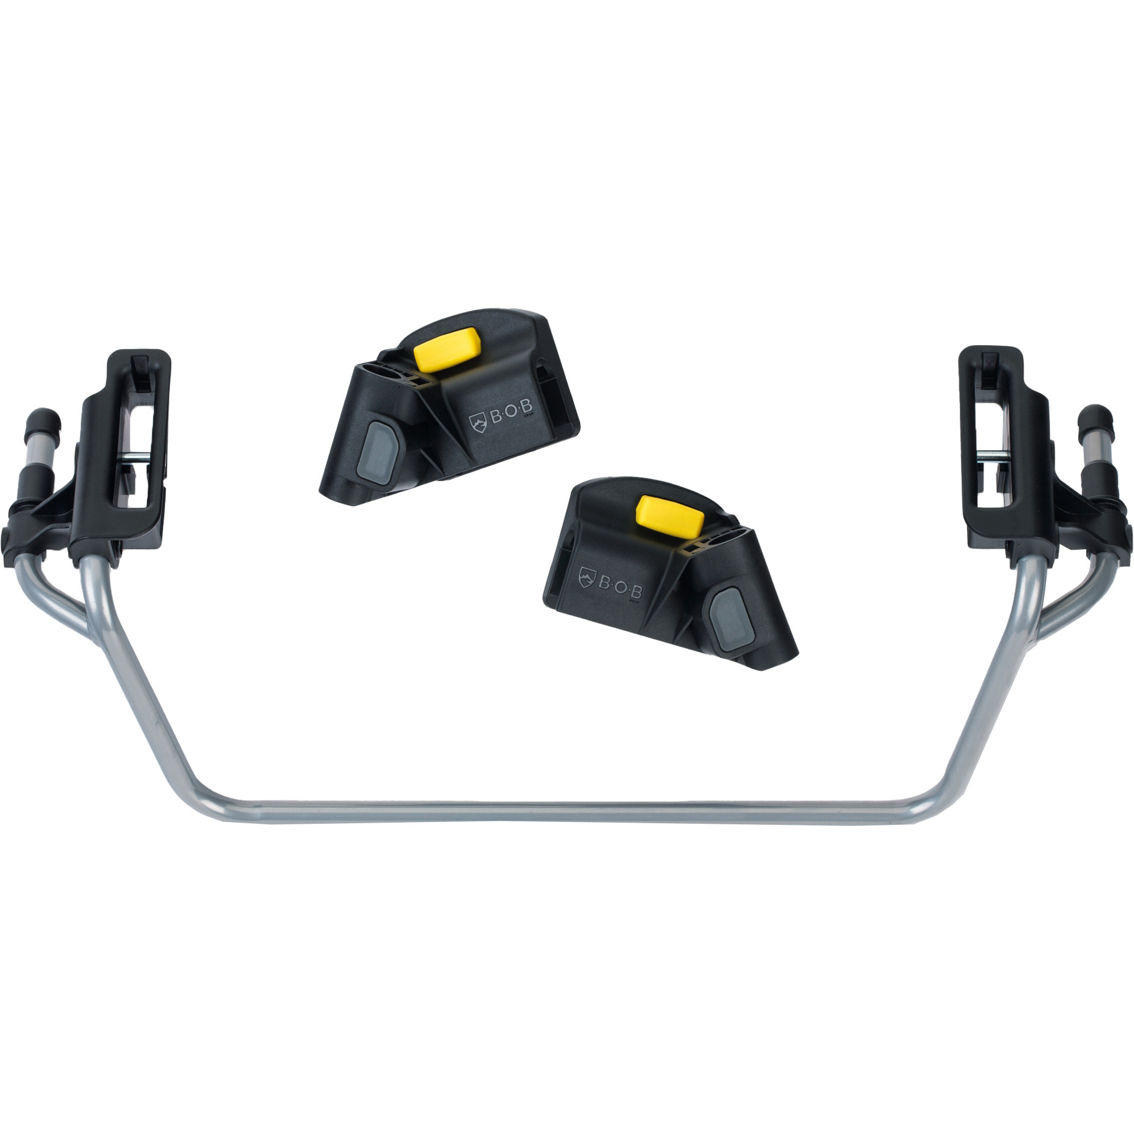 BOB Gear Single Jogging Stroller Adapter for Britax Infant Car Seats - Image 2 of 2